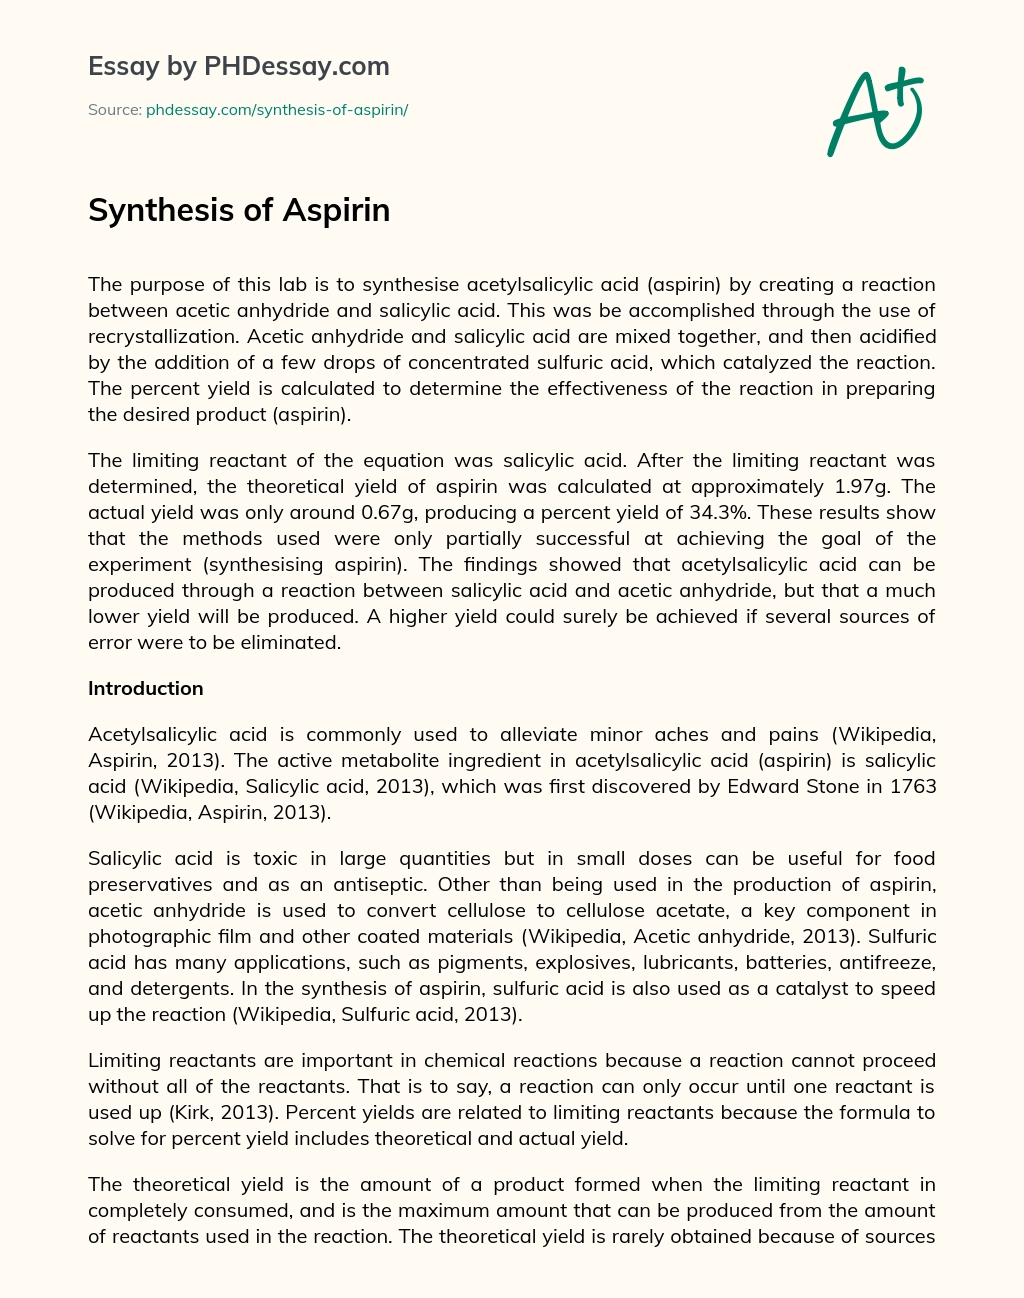 Synthesis of Aspirin essay